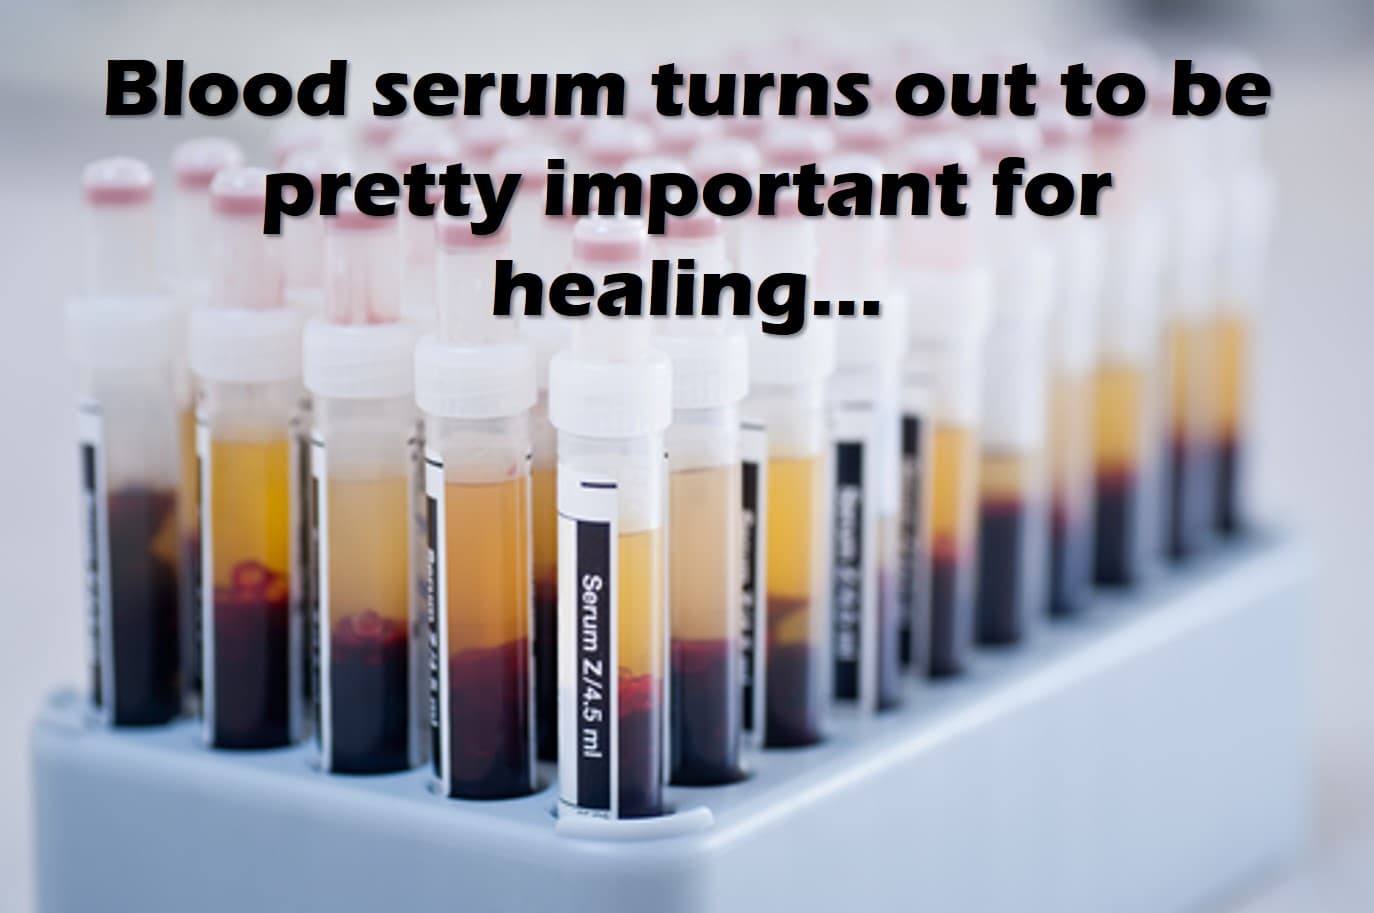 blood serum and healing